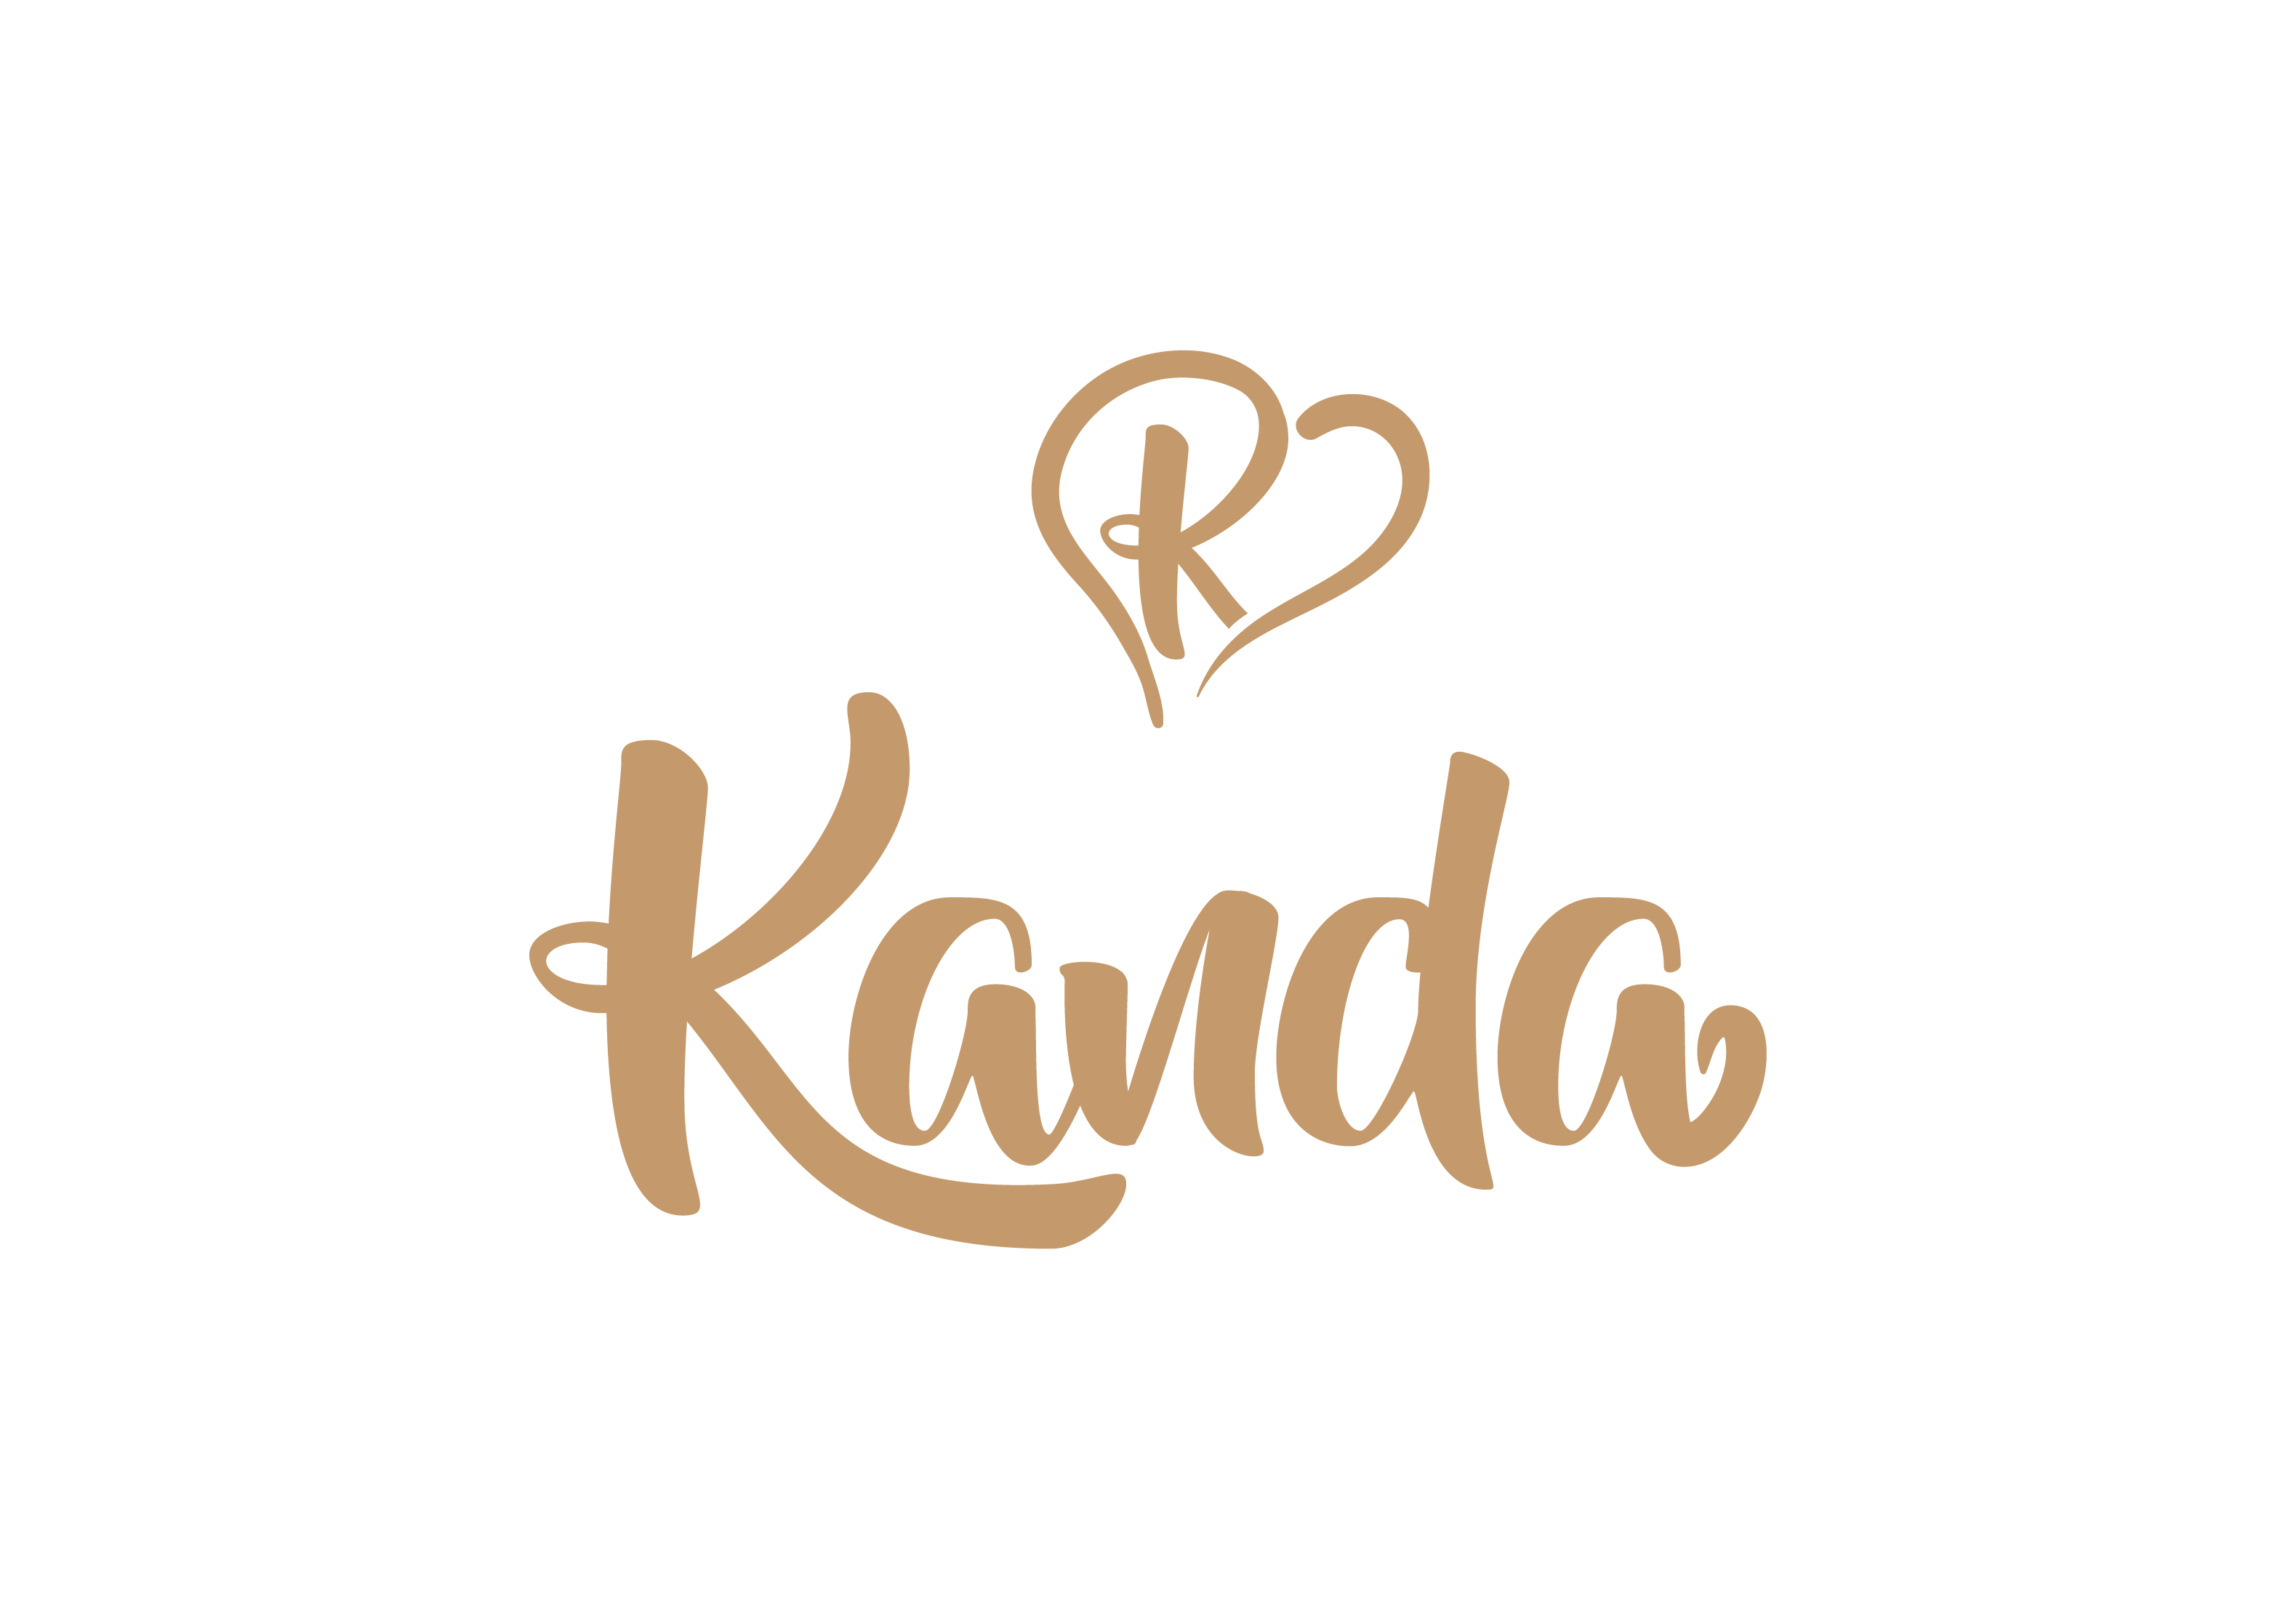 Kanda Logo 1